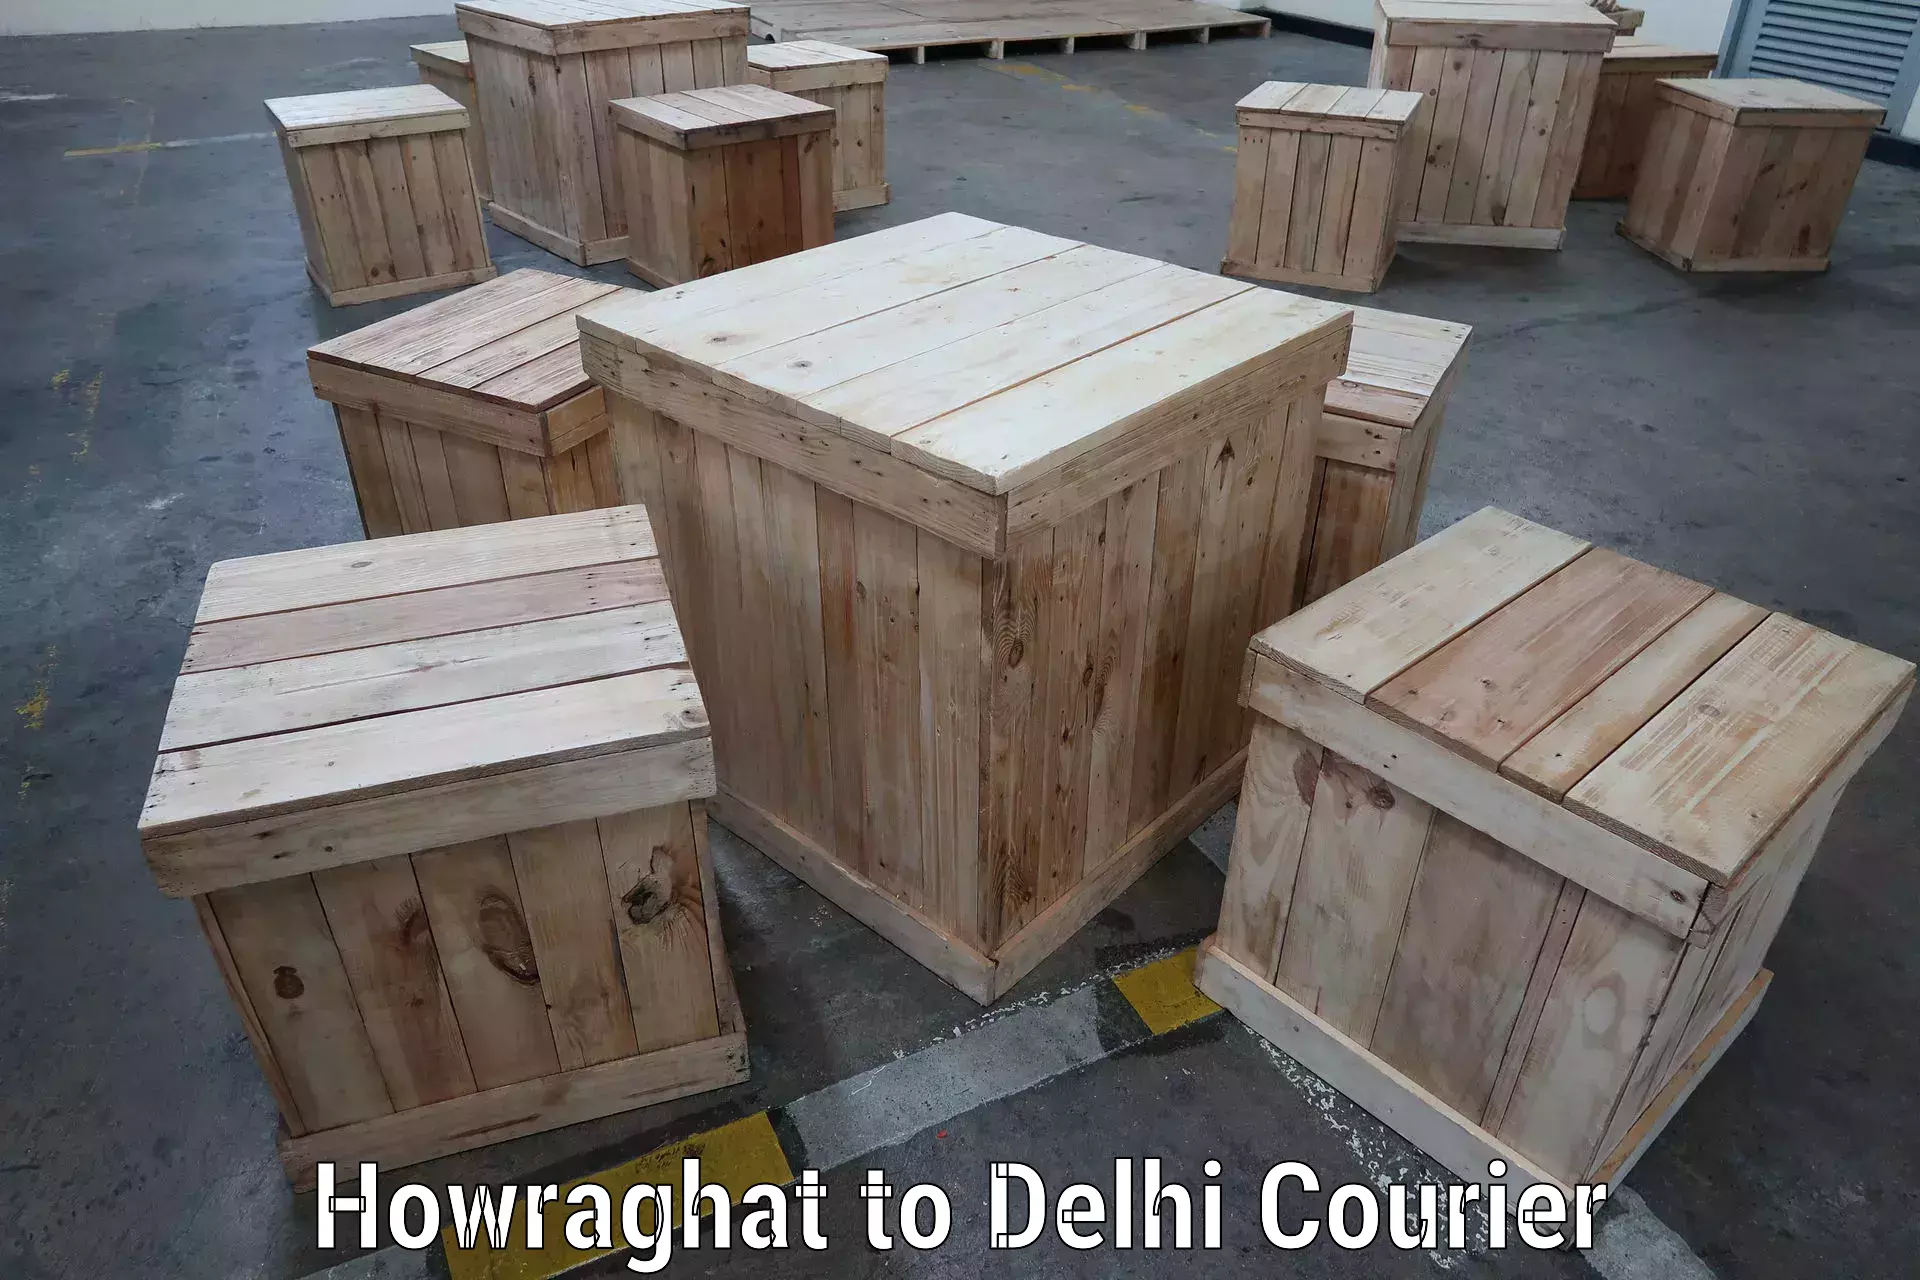 Courier service comparison Howraghat to Delhi